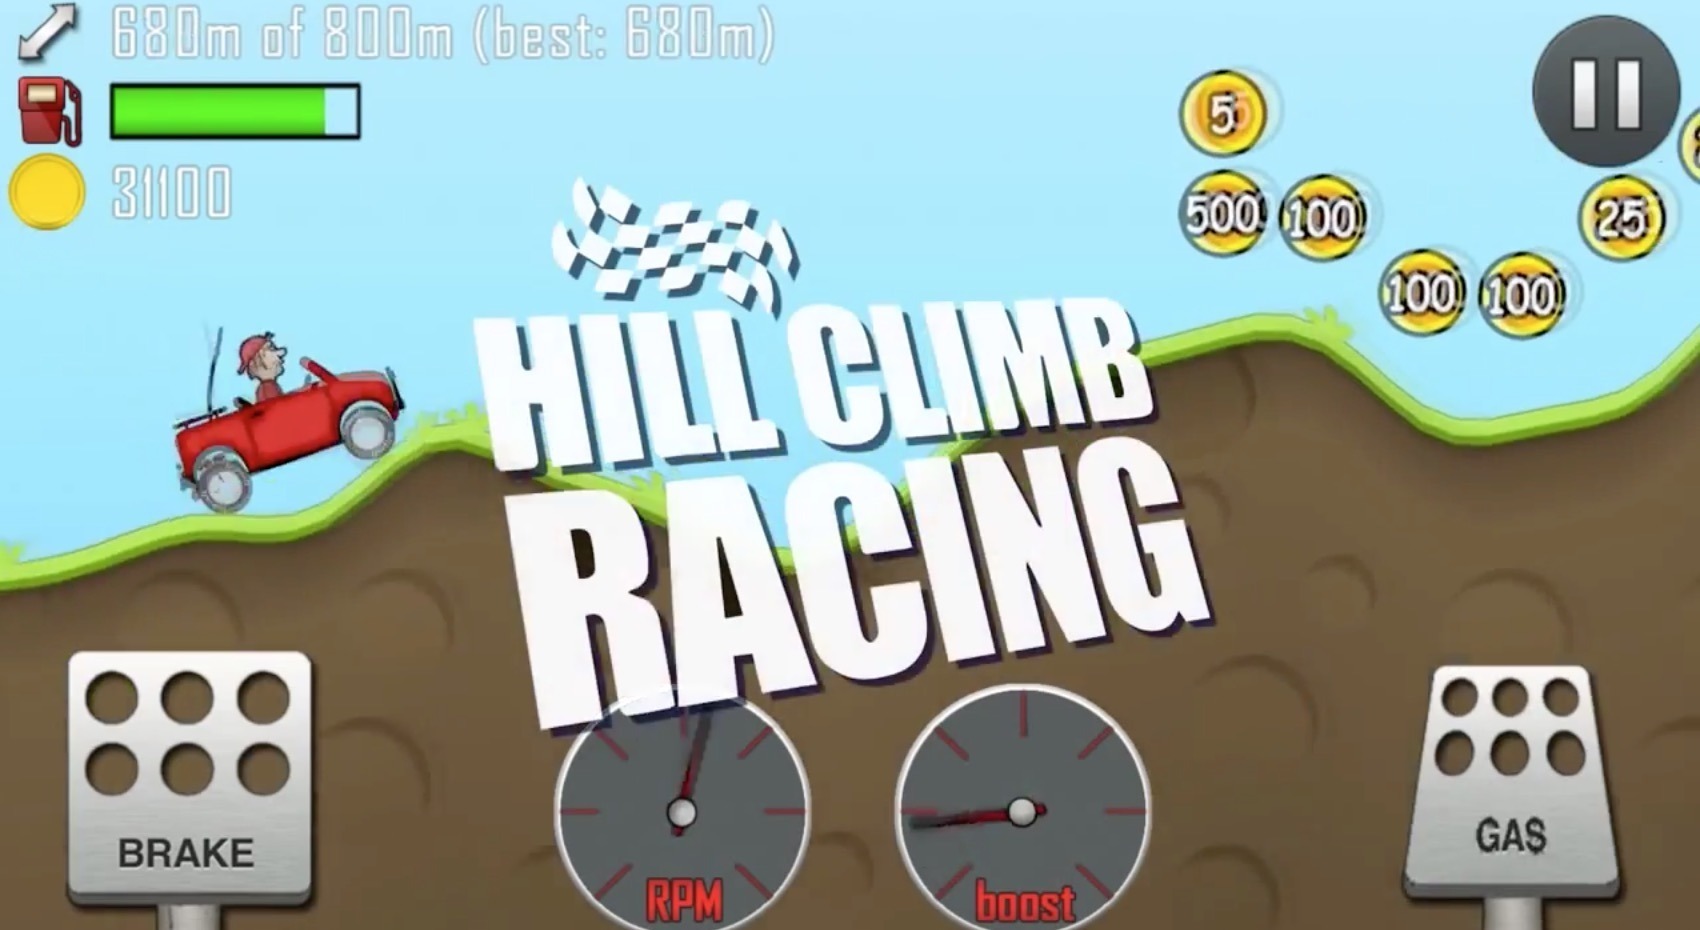 Климб рейсинг на пк. Хилл климб Ракинг. Хил климб рейсинг 1. Игра Hill Climb Racing 1. Hill Climb Racing машины.